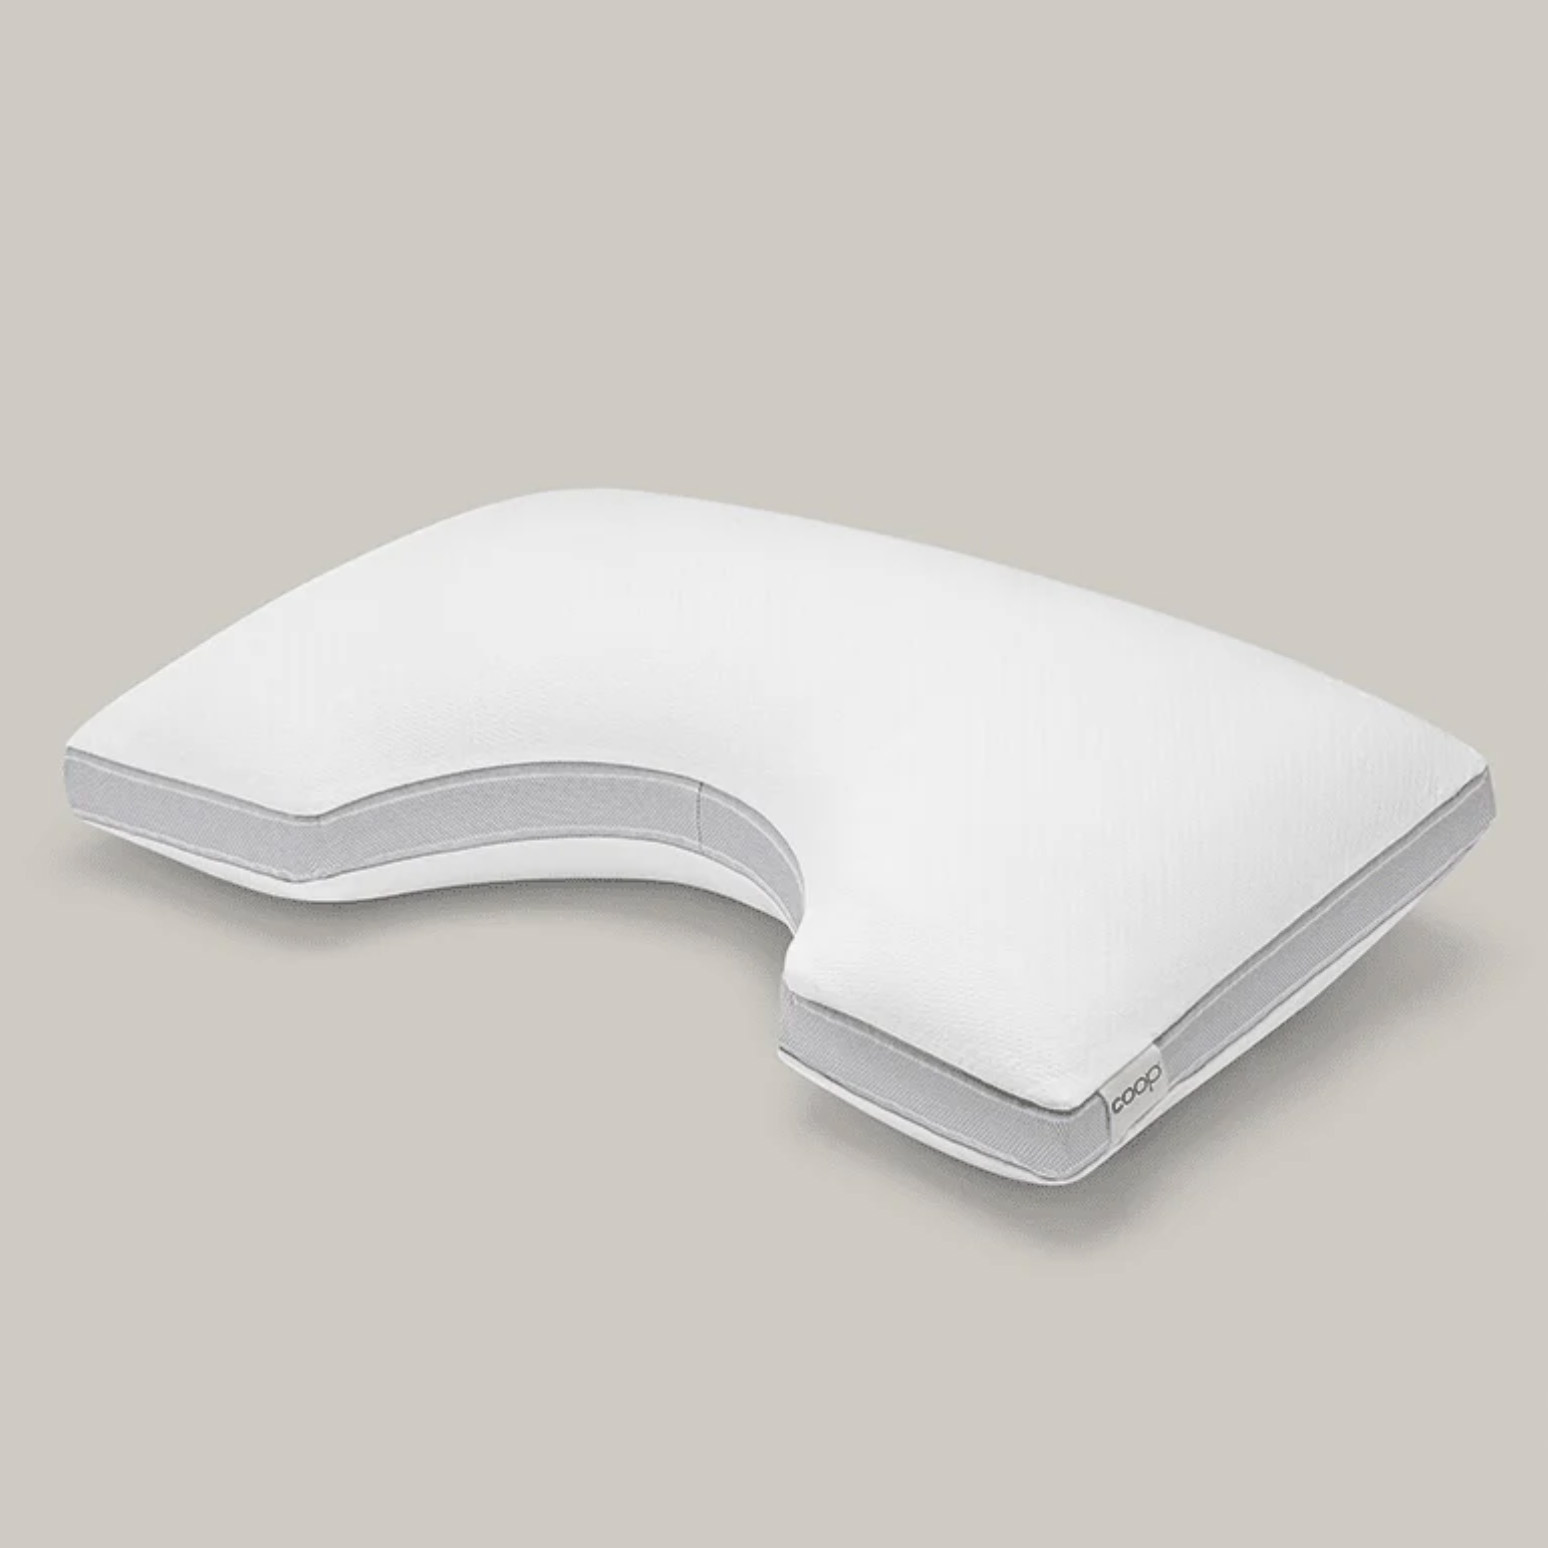 The Eden Cool+ Cut-Out pillow